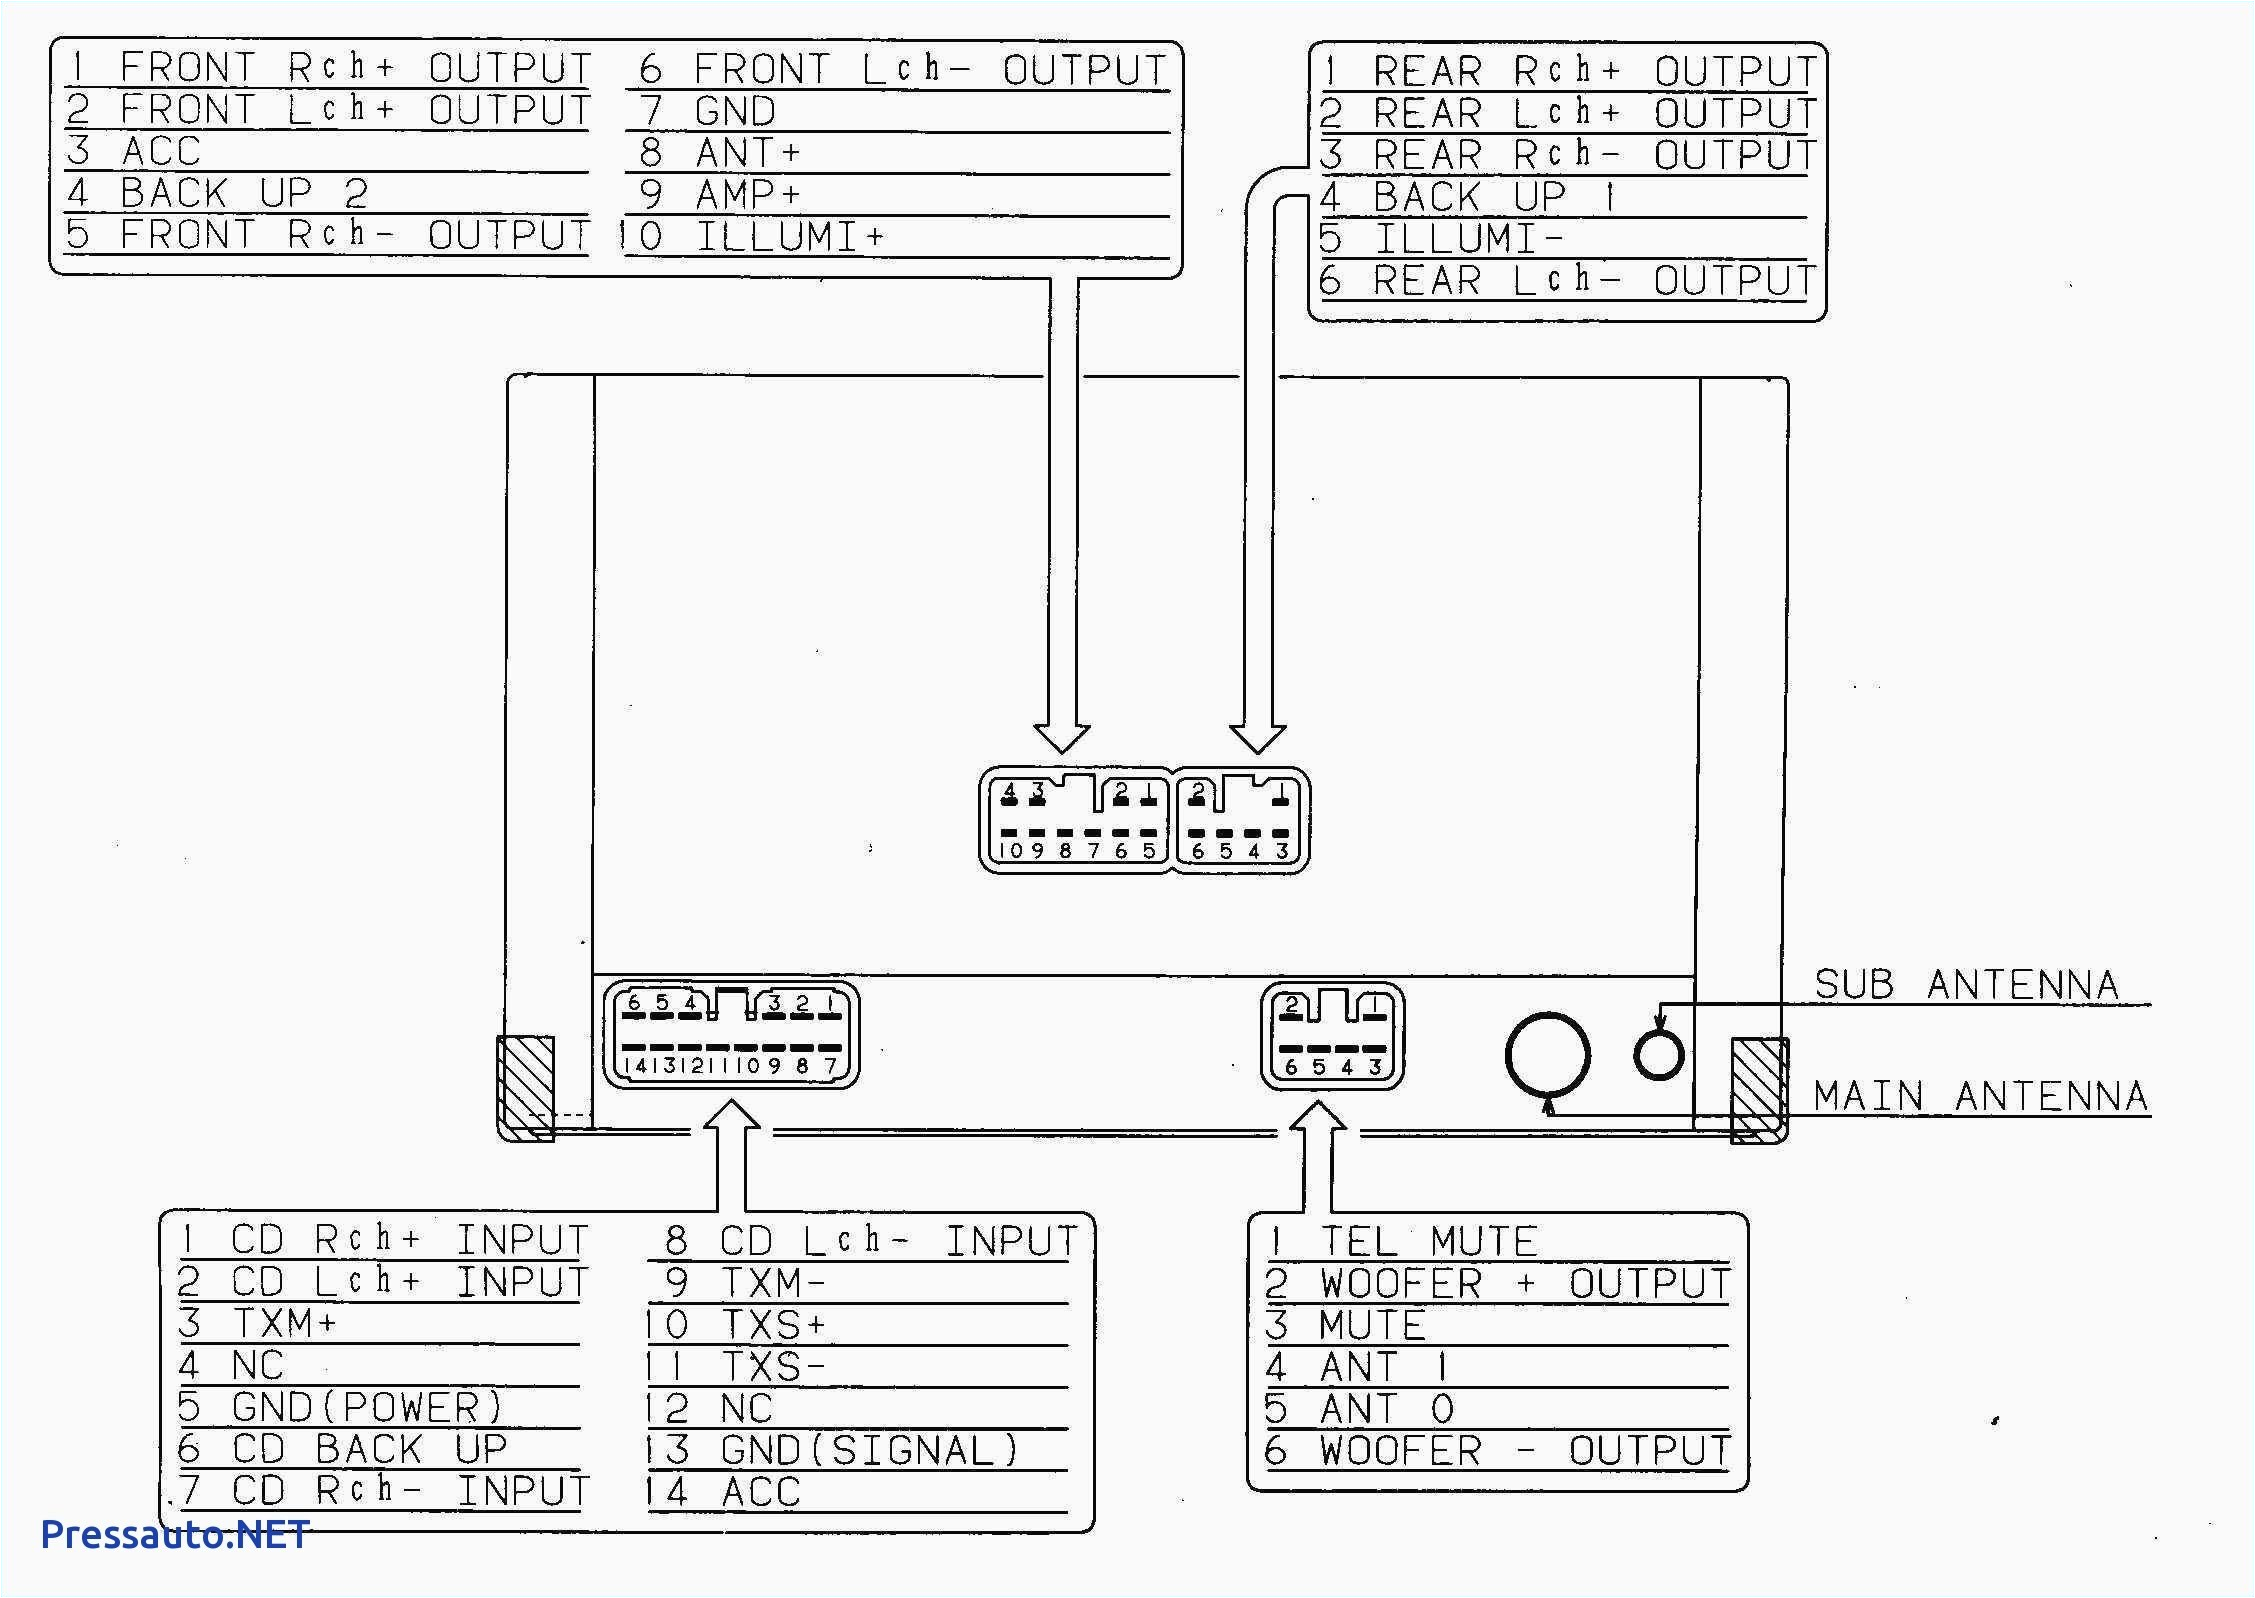 roadtrek audio wiring diagram wiring diagram 1990 roadtrek wiring diagram wiring diagram nameroadtrek audio wiring diagram